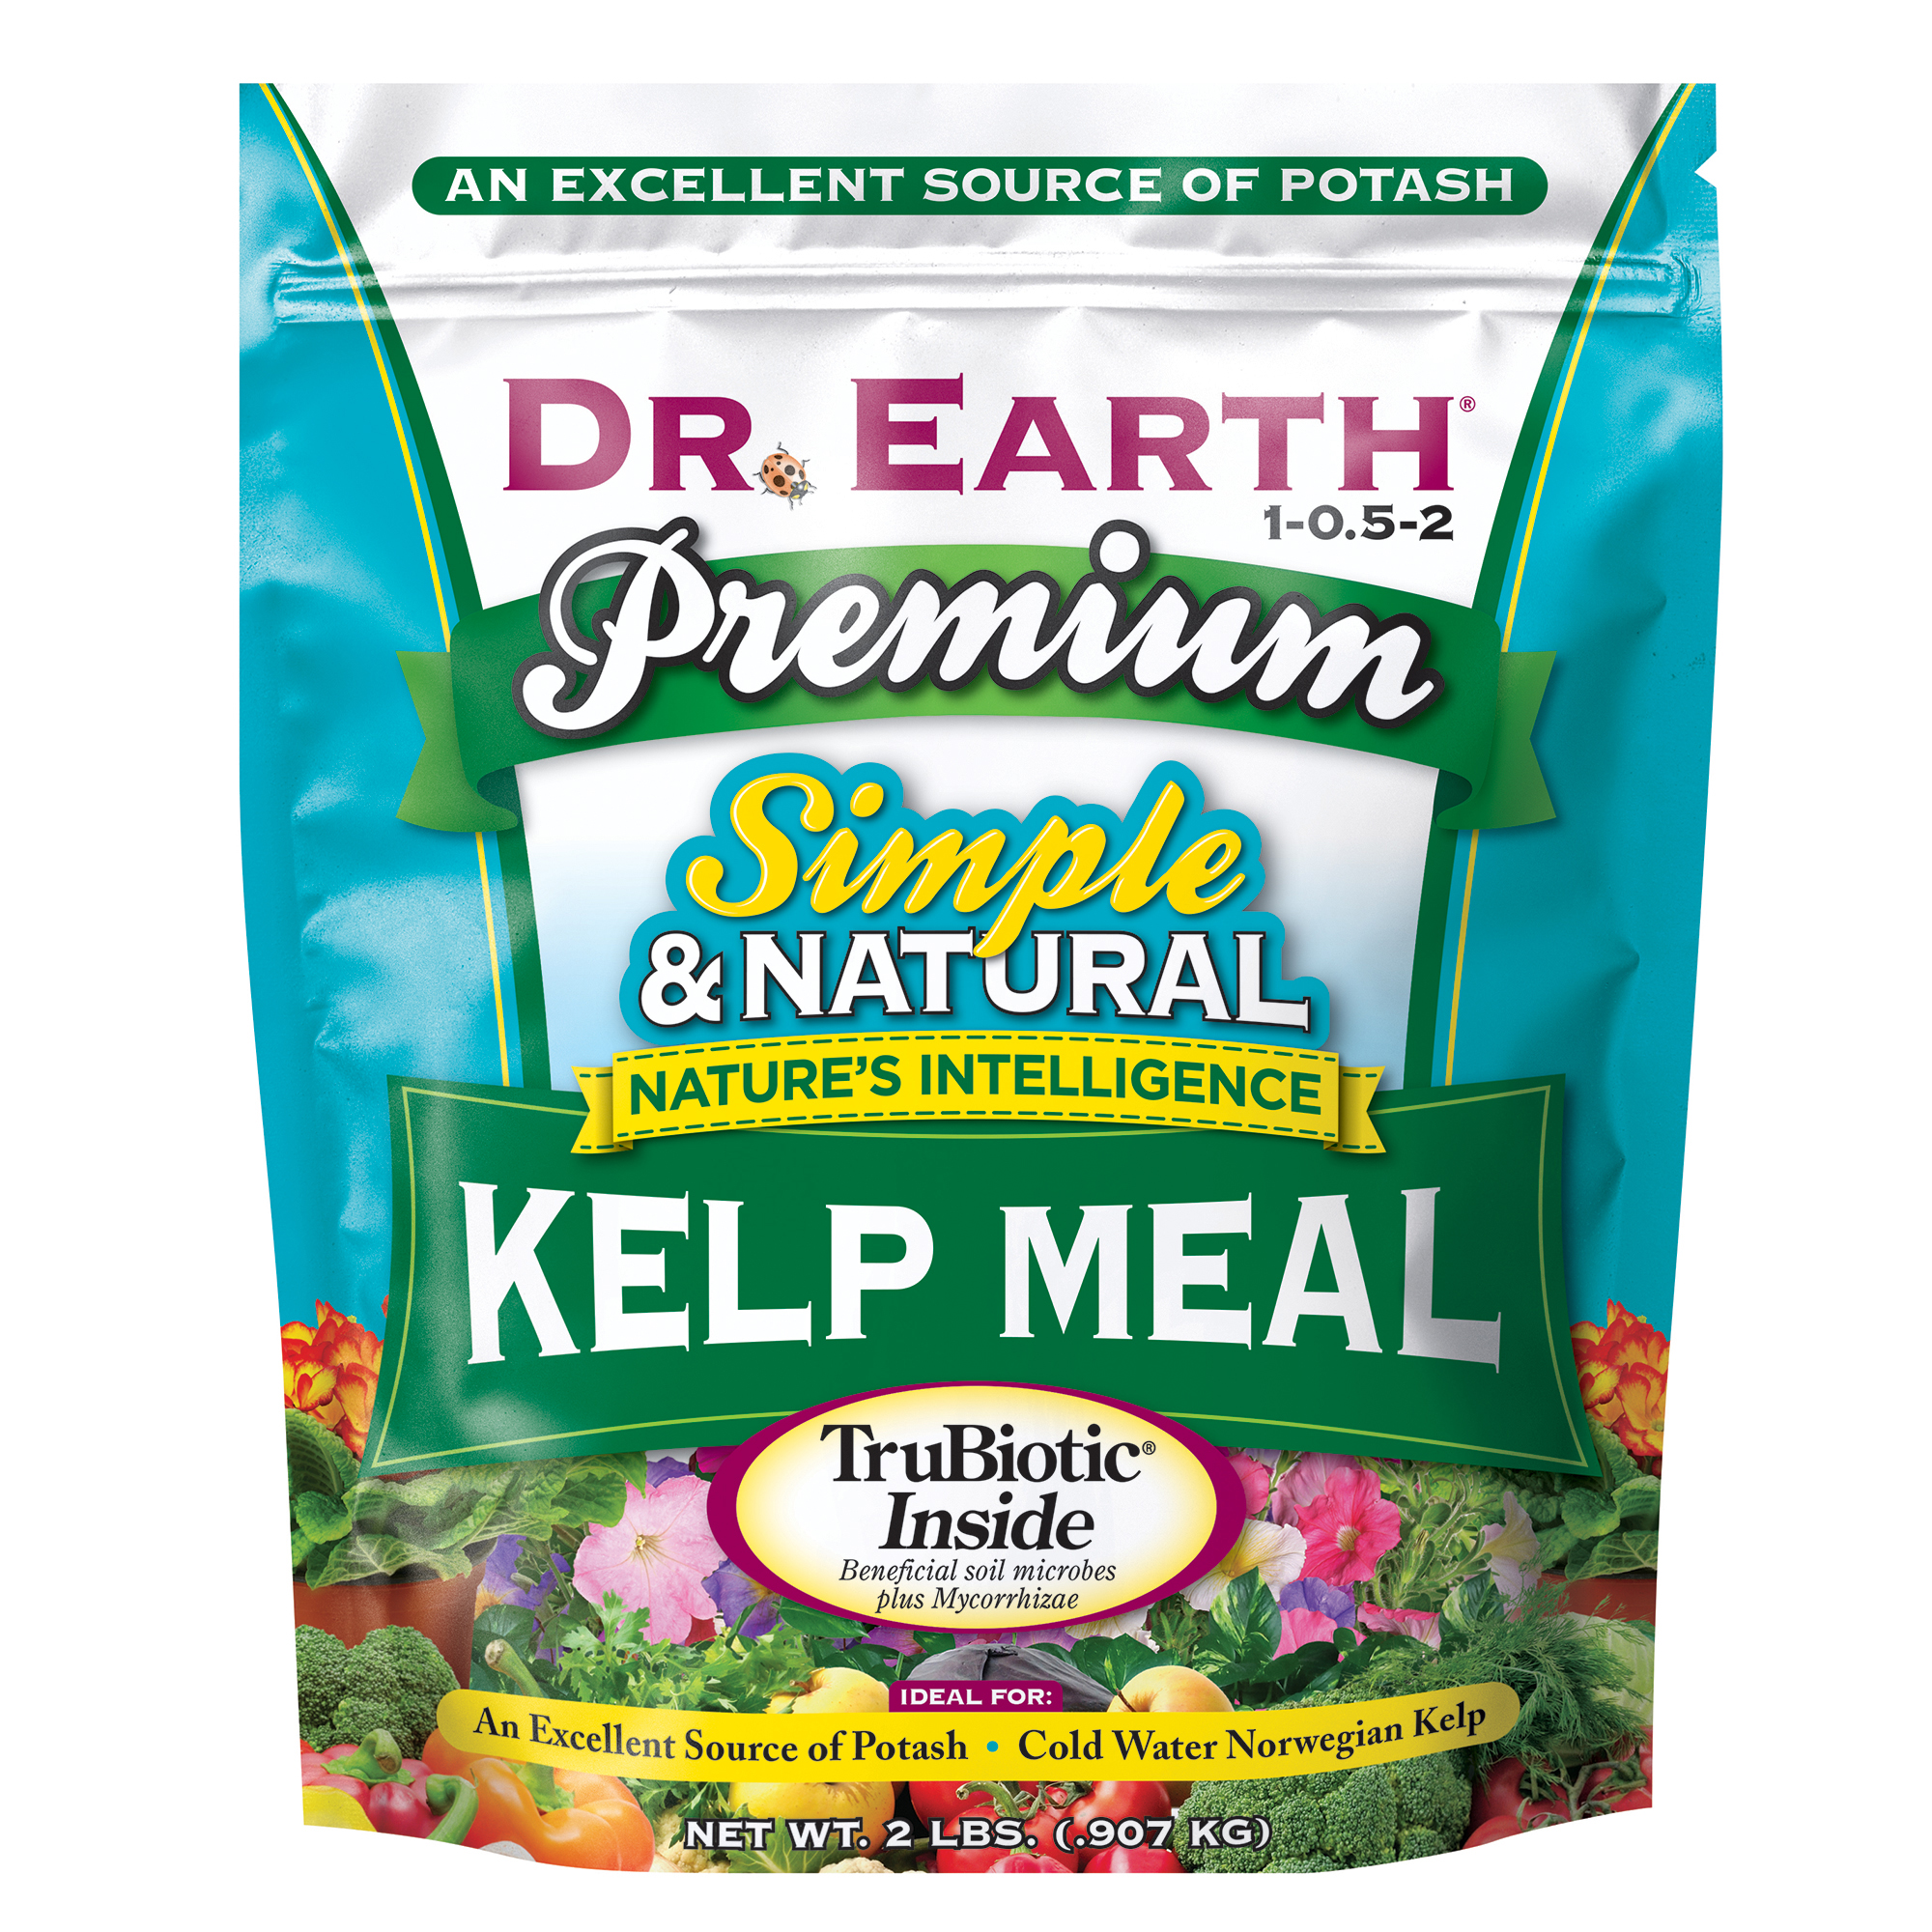 Premium　Fertilizer,　Organic　Earth　Dr.　Plant　1-0.5-2　Meal　Natural　Food,　Kelp　lb.